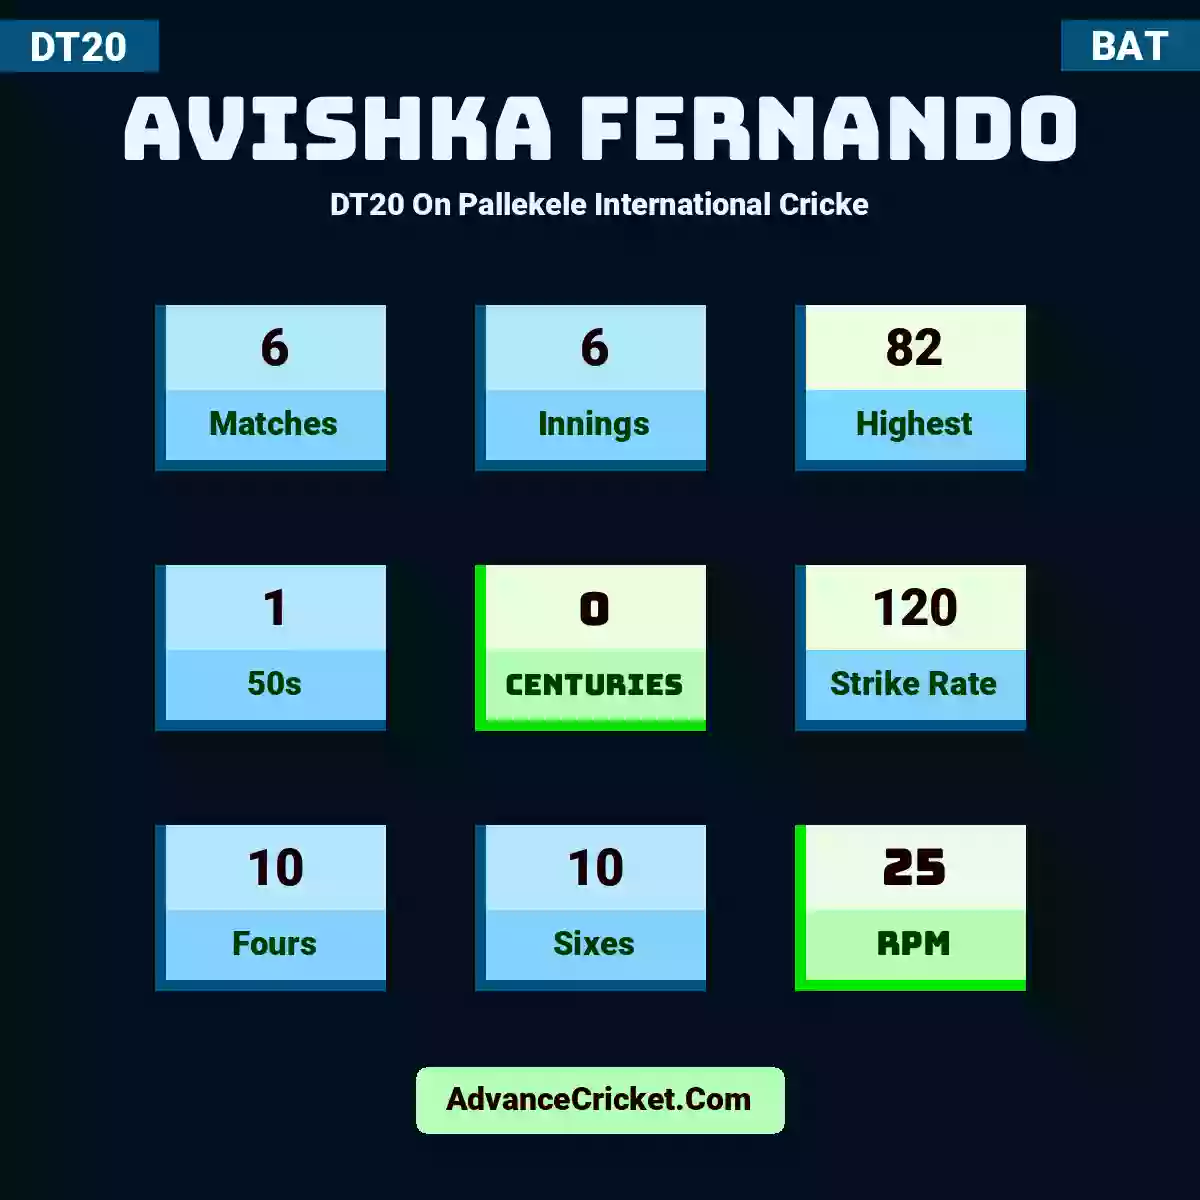 Avishka Fernando DT20  On Pallekele International Cricke, Avishka Fernando played 6 matches, scored 82 runs as highest, 1 half-centuries, and 0 centuries, with a strike rate of 120. A.Fernando hit 10 fours and 10 sixes, with an RPM of 25.